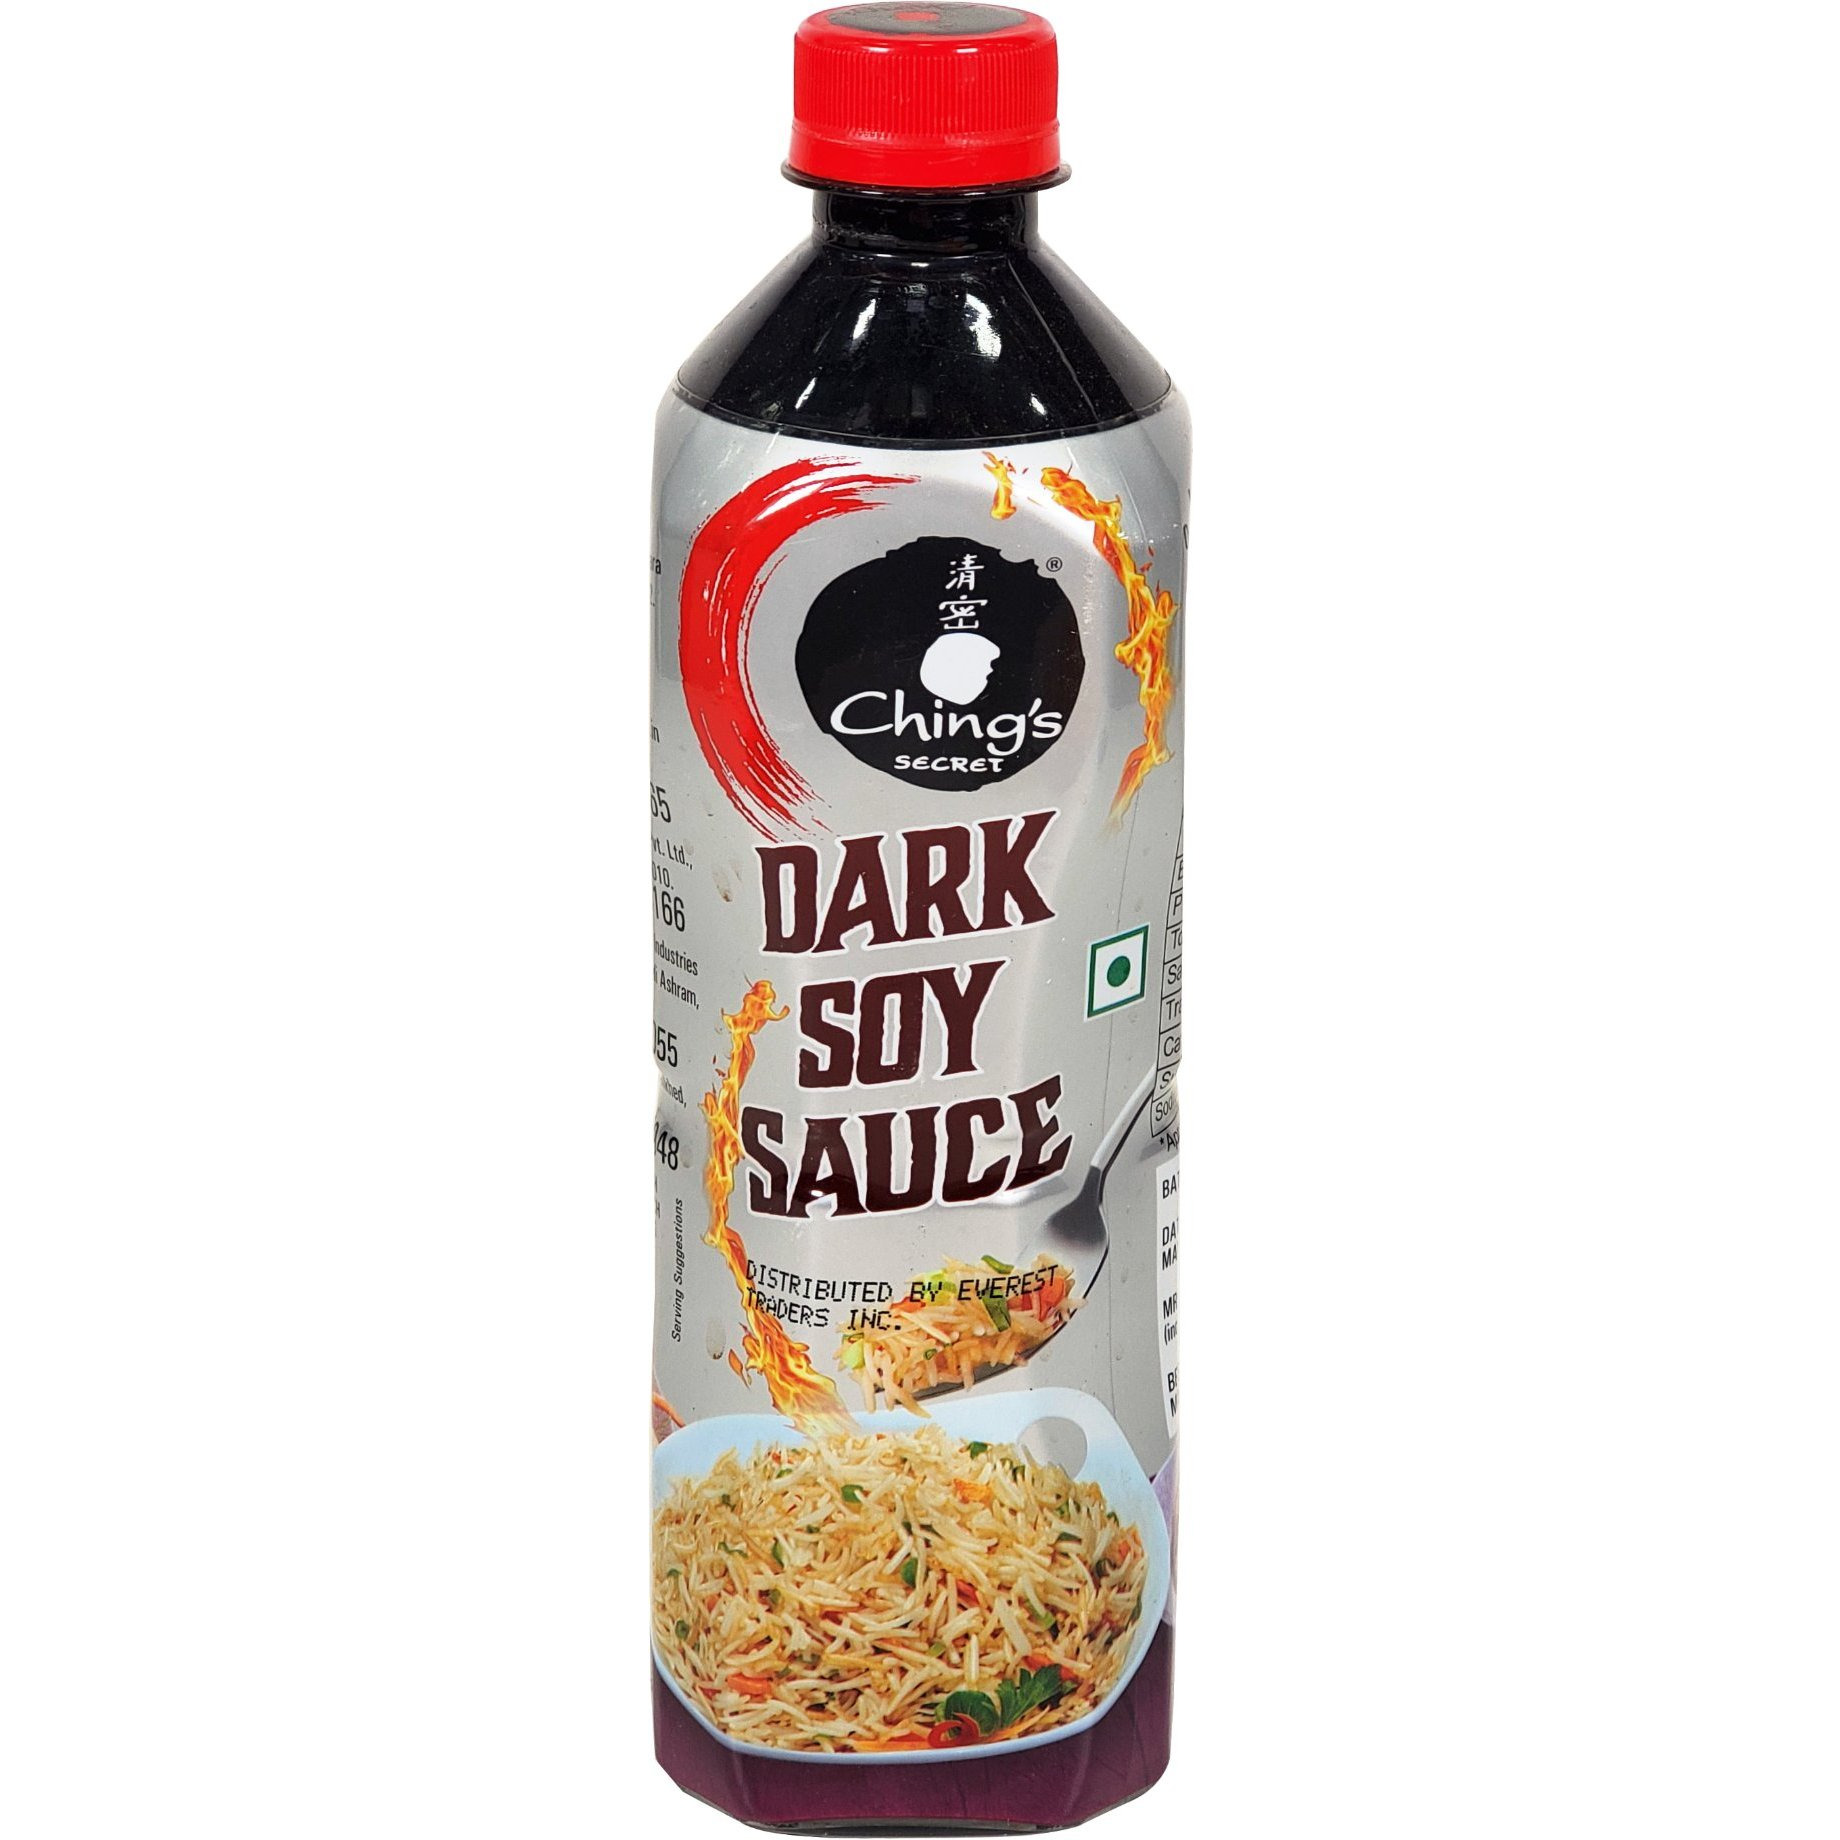 Case of 24 - Ching's Secret Dark Soy Sauce - 750 Gm (26.45 Oz) [50% Off]